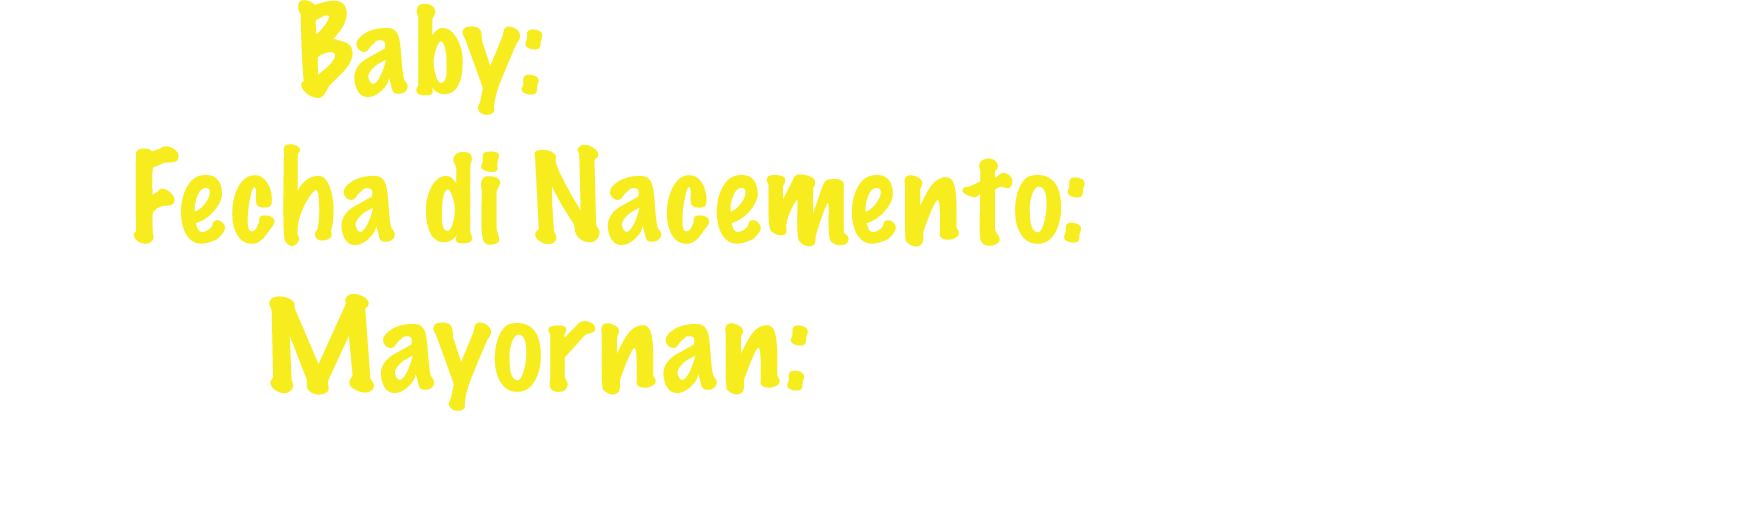 Baby: Naliyah Alyssa Thijsen Fecha di Nacemento: 15 mei 2022 Mayornan: Nathaly Maduro & Stephan Thijsen